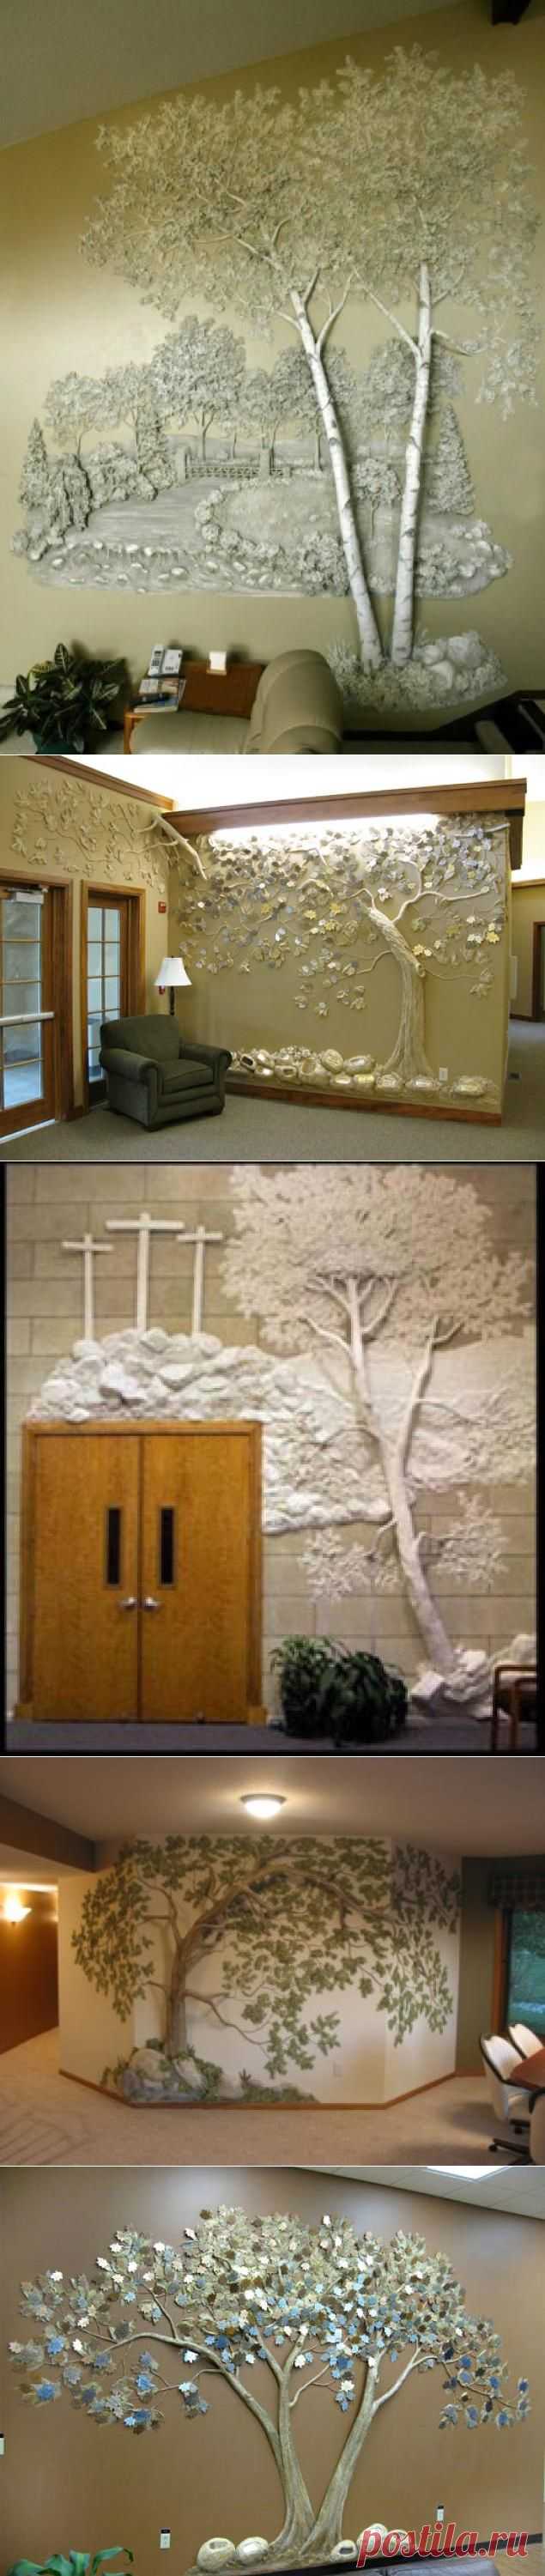 Декоративная идея: дерево на стене — Наши дома